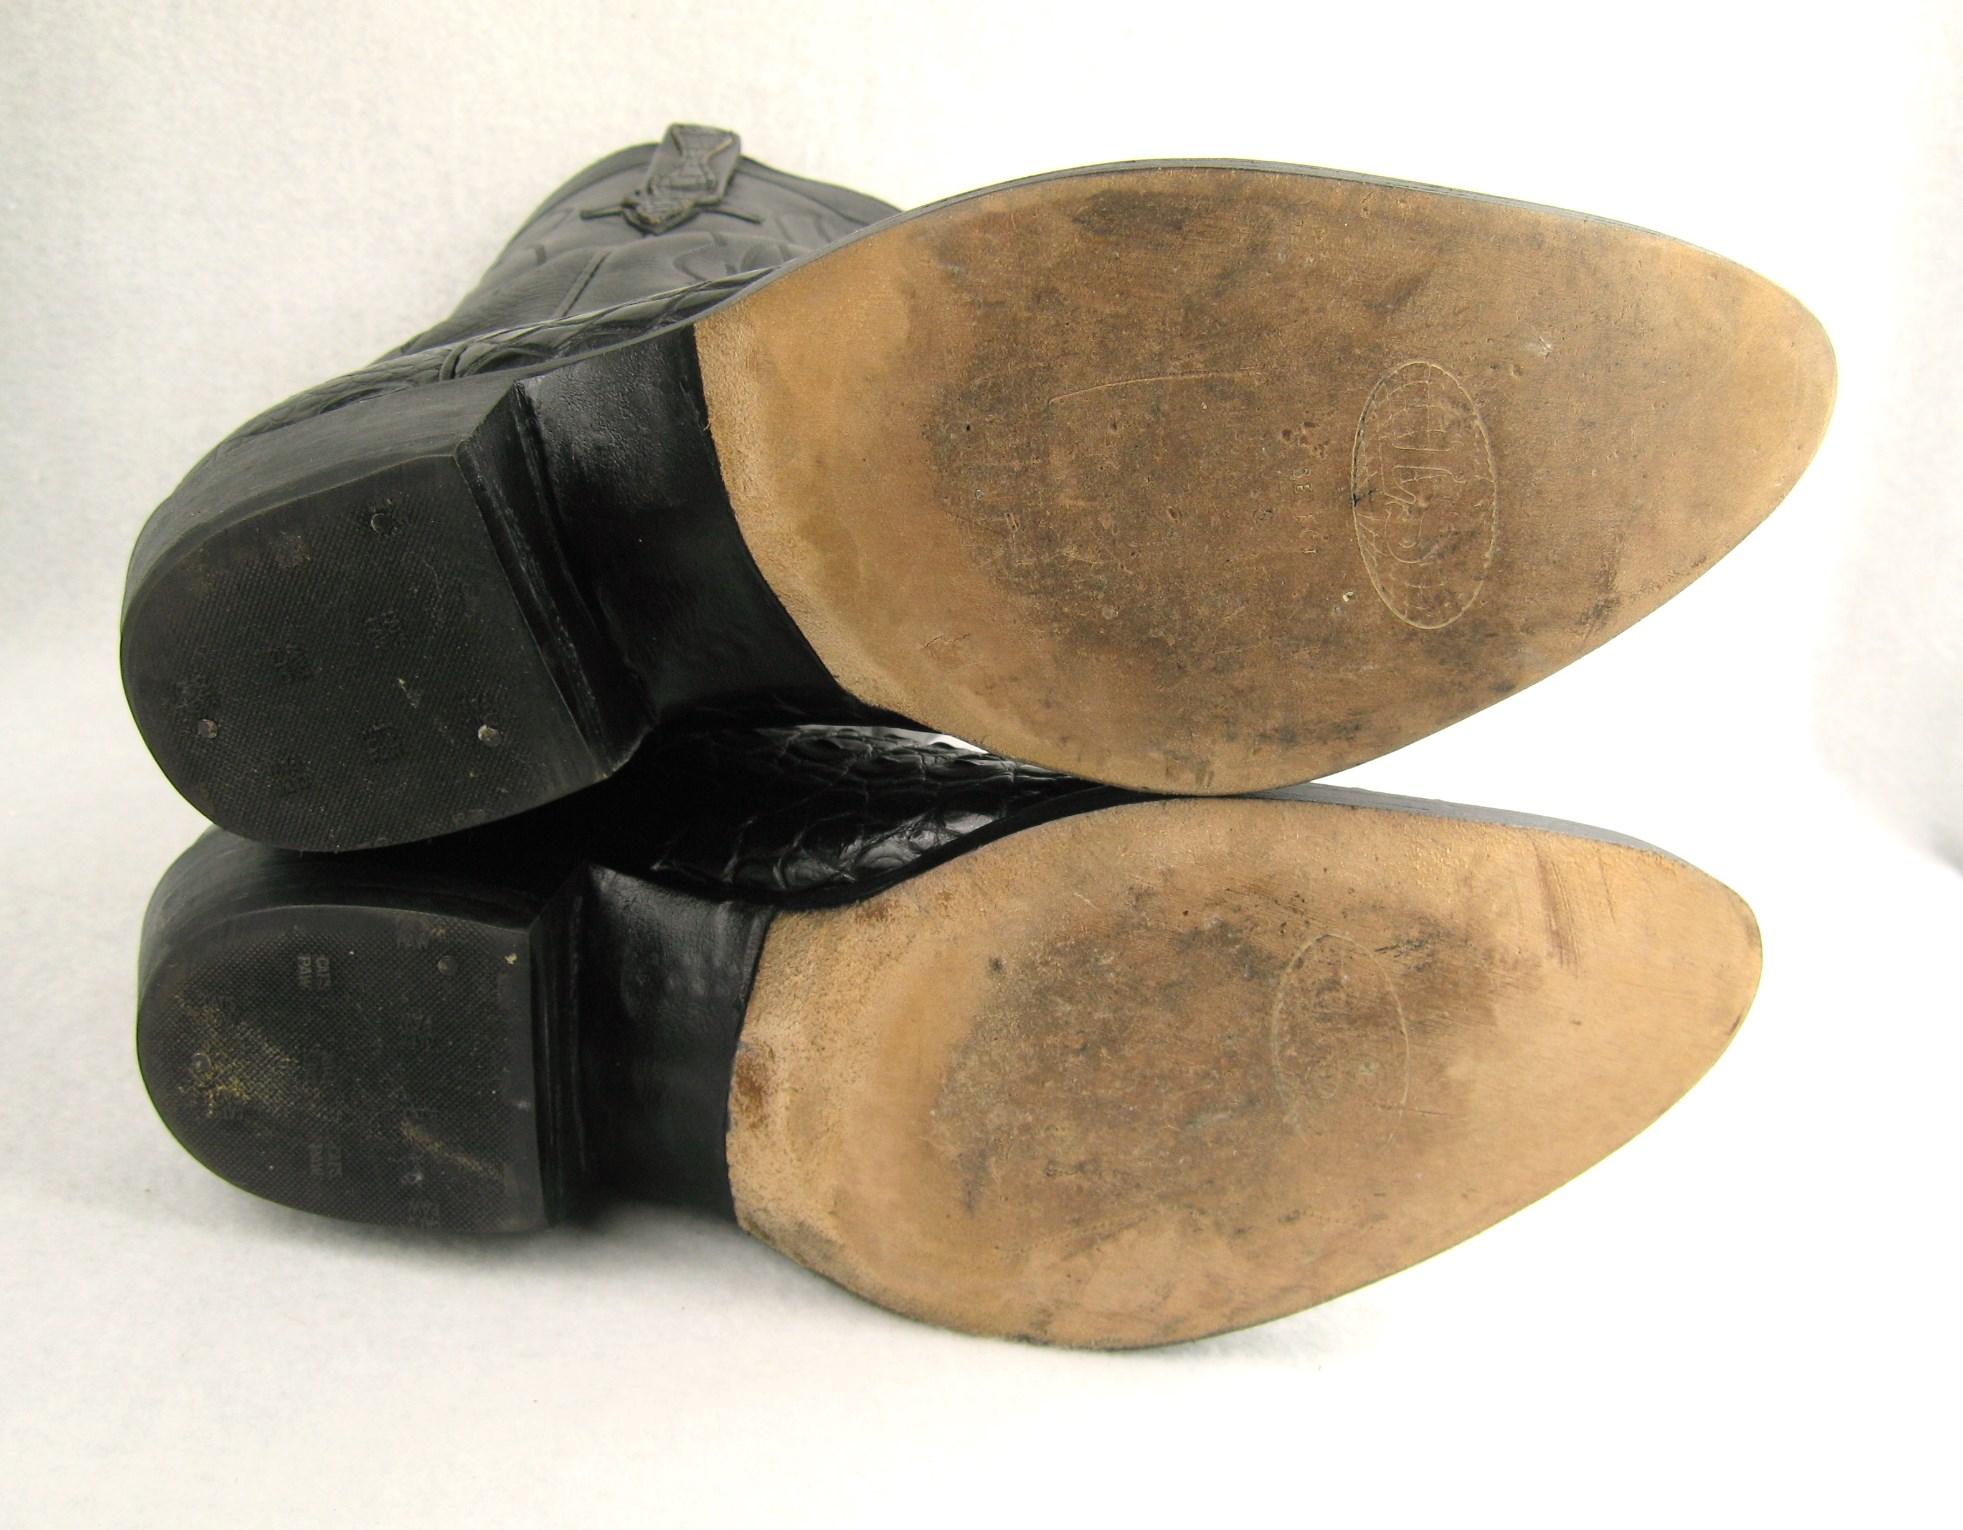 Lucchese Cowboy boots Handmade Horned Back Alligator - Black 10 D For ...